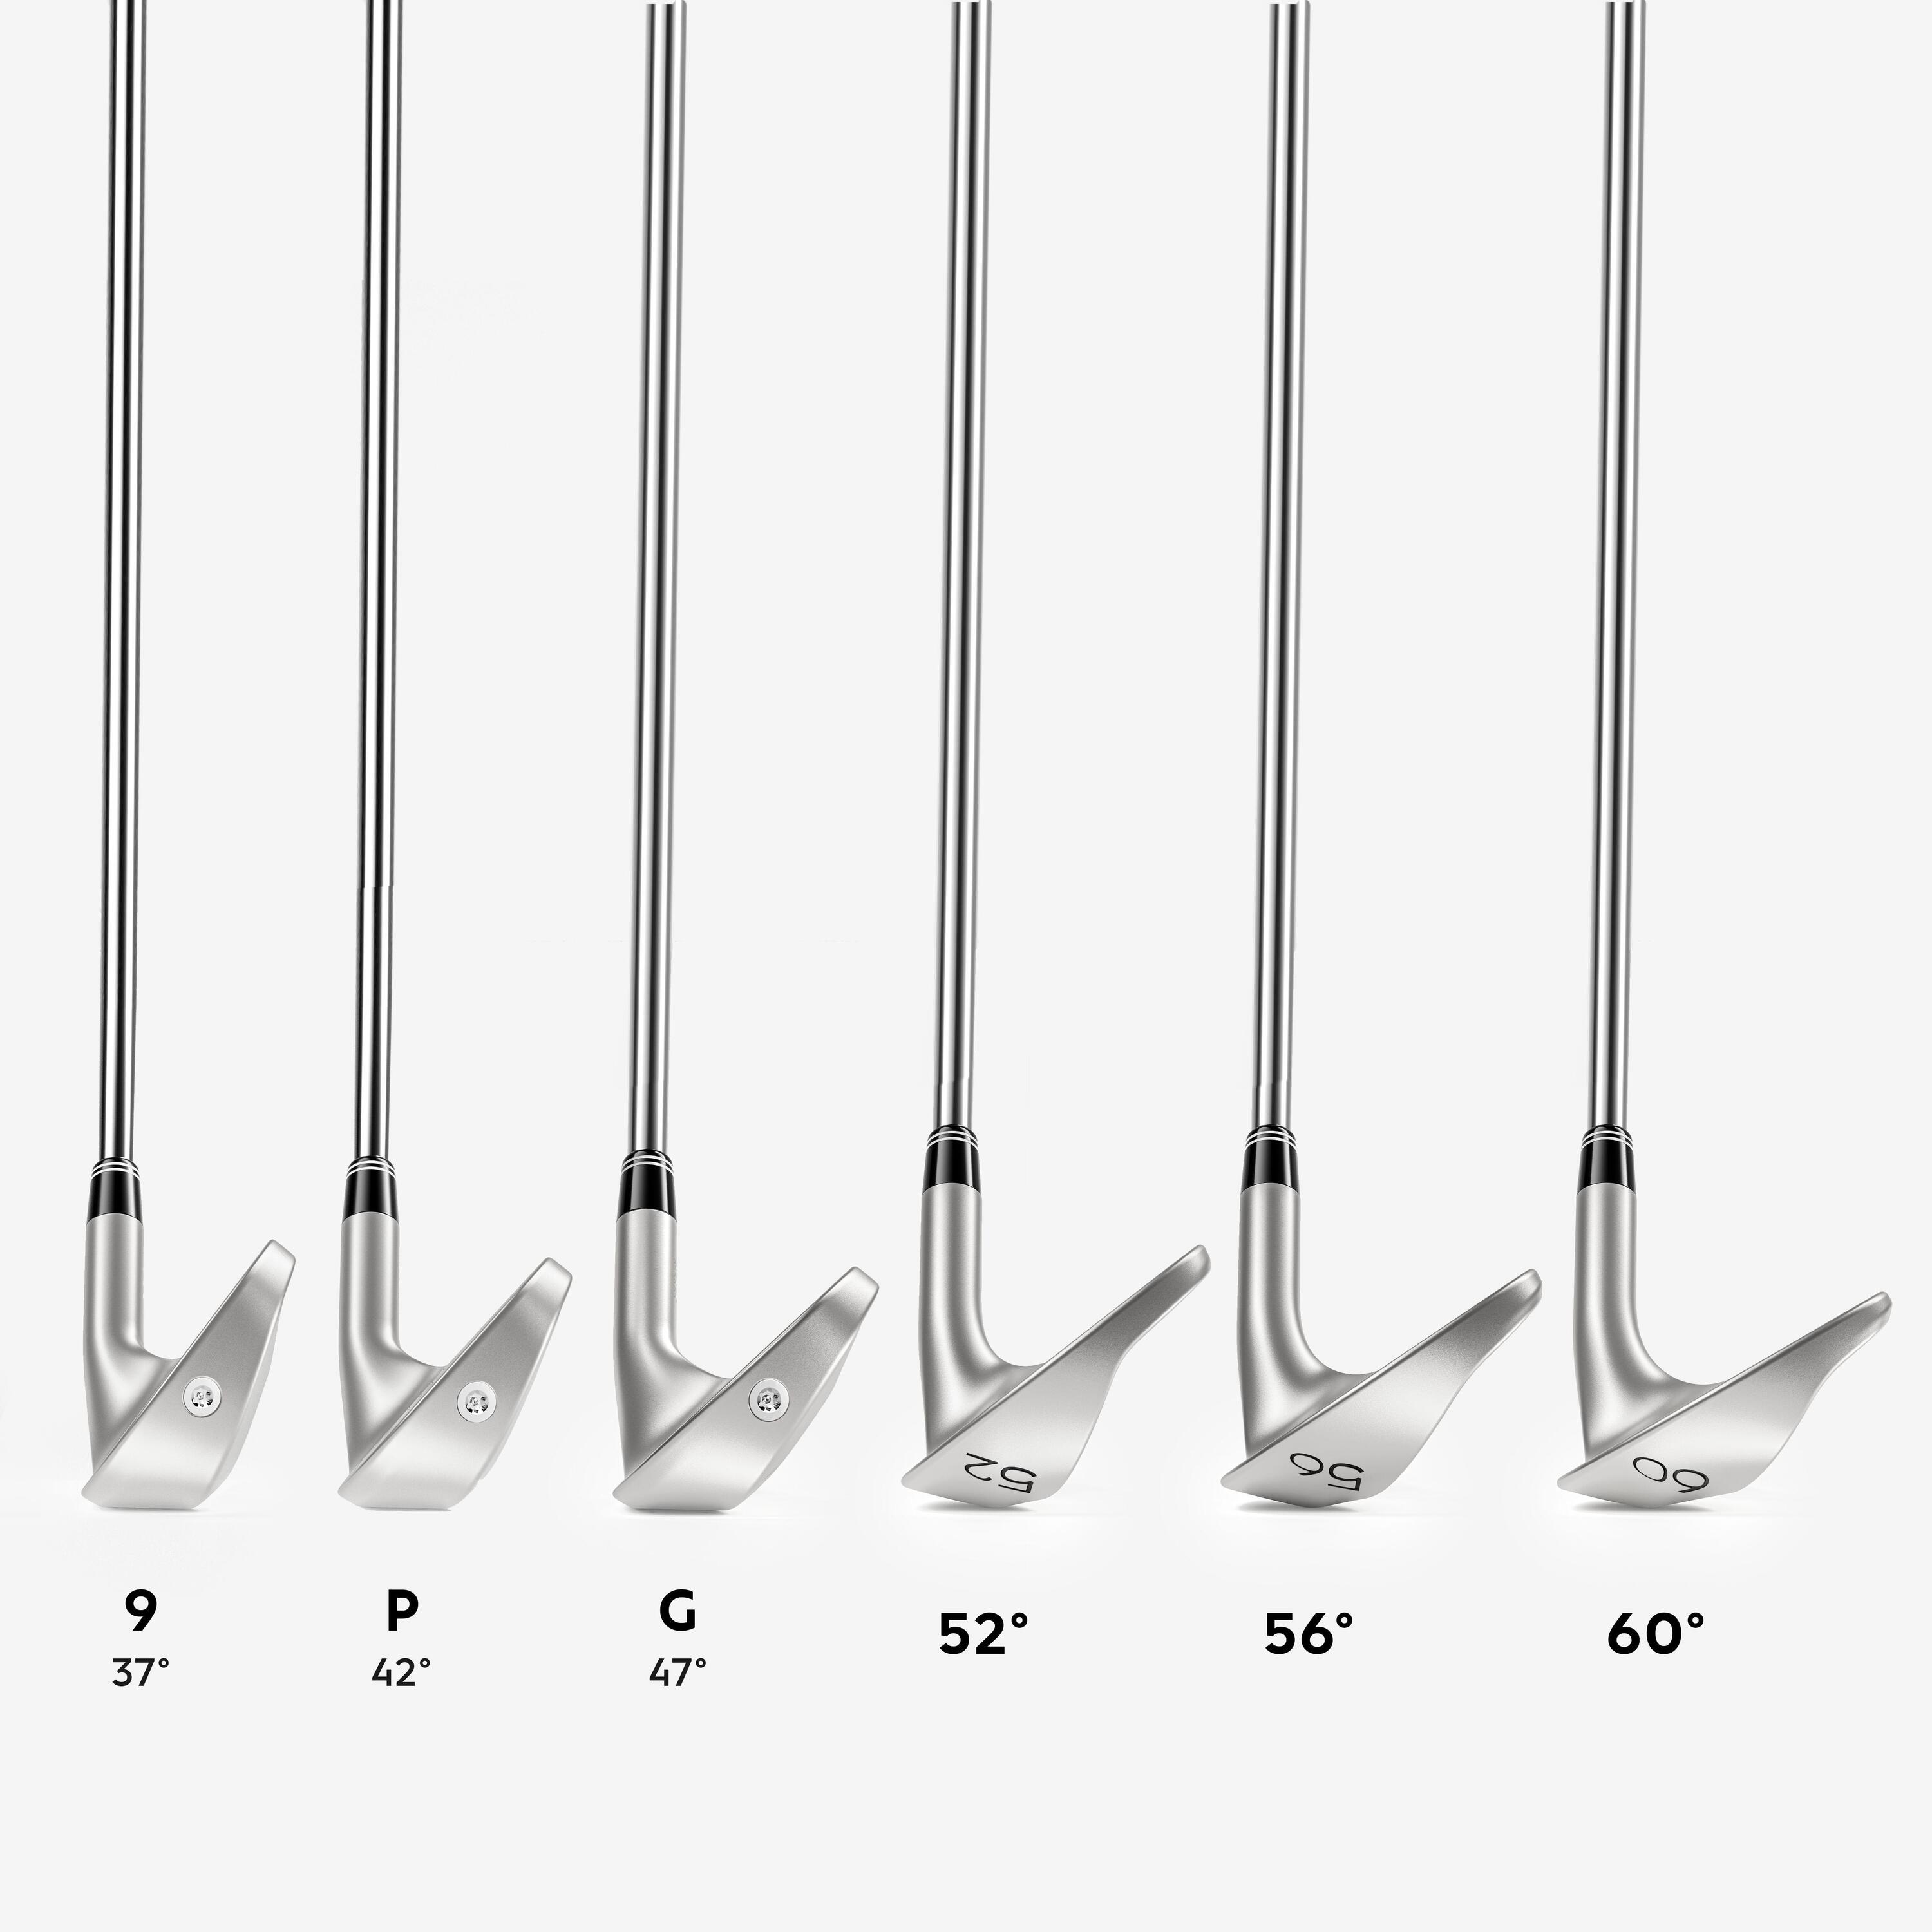 Golf Wedge Left-handed Size 1 steel - INESIS 500 4/8